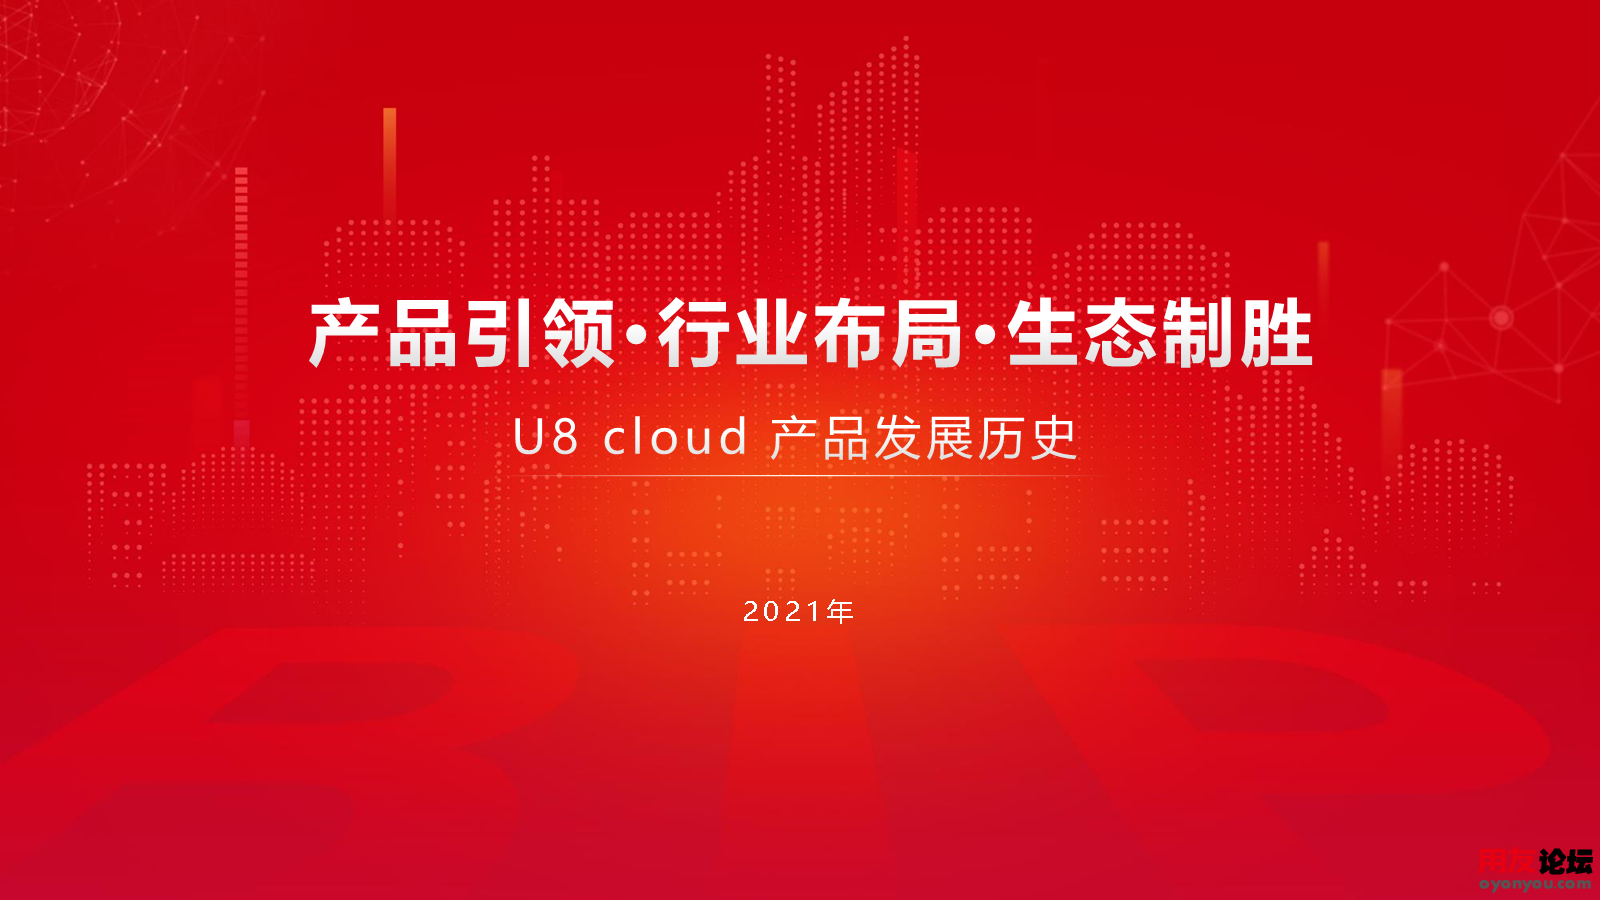 U8cloud产品发展简介—2021版.png